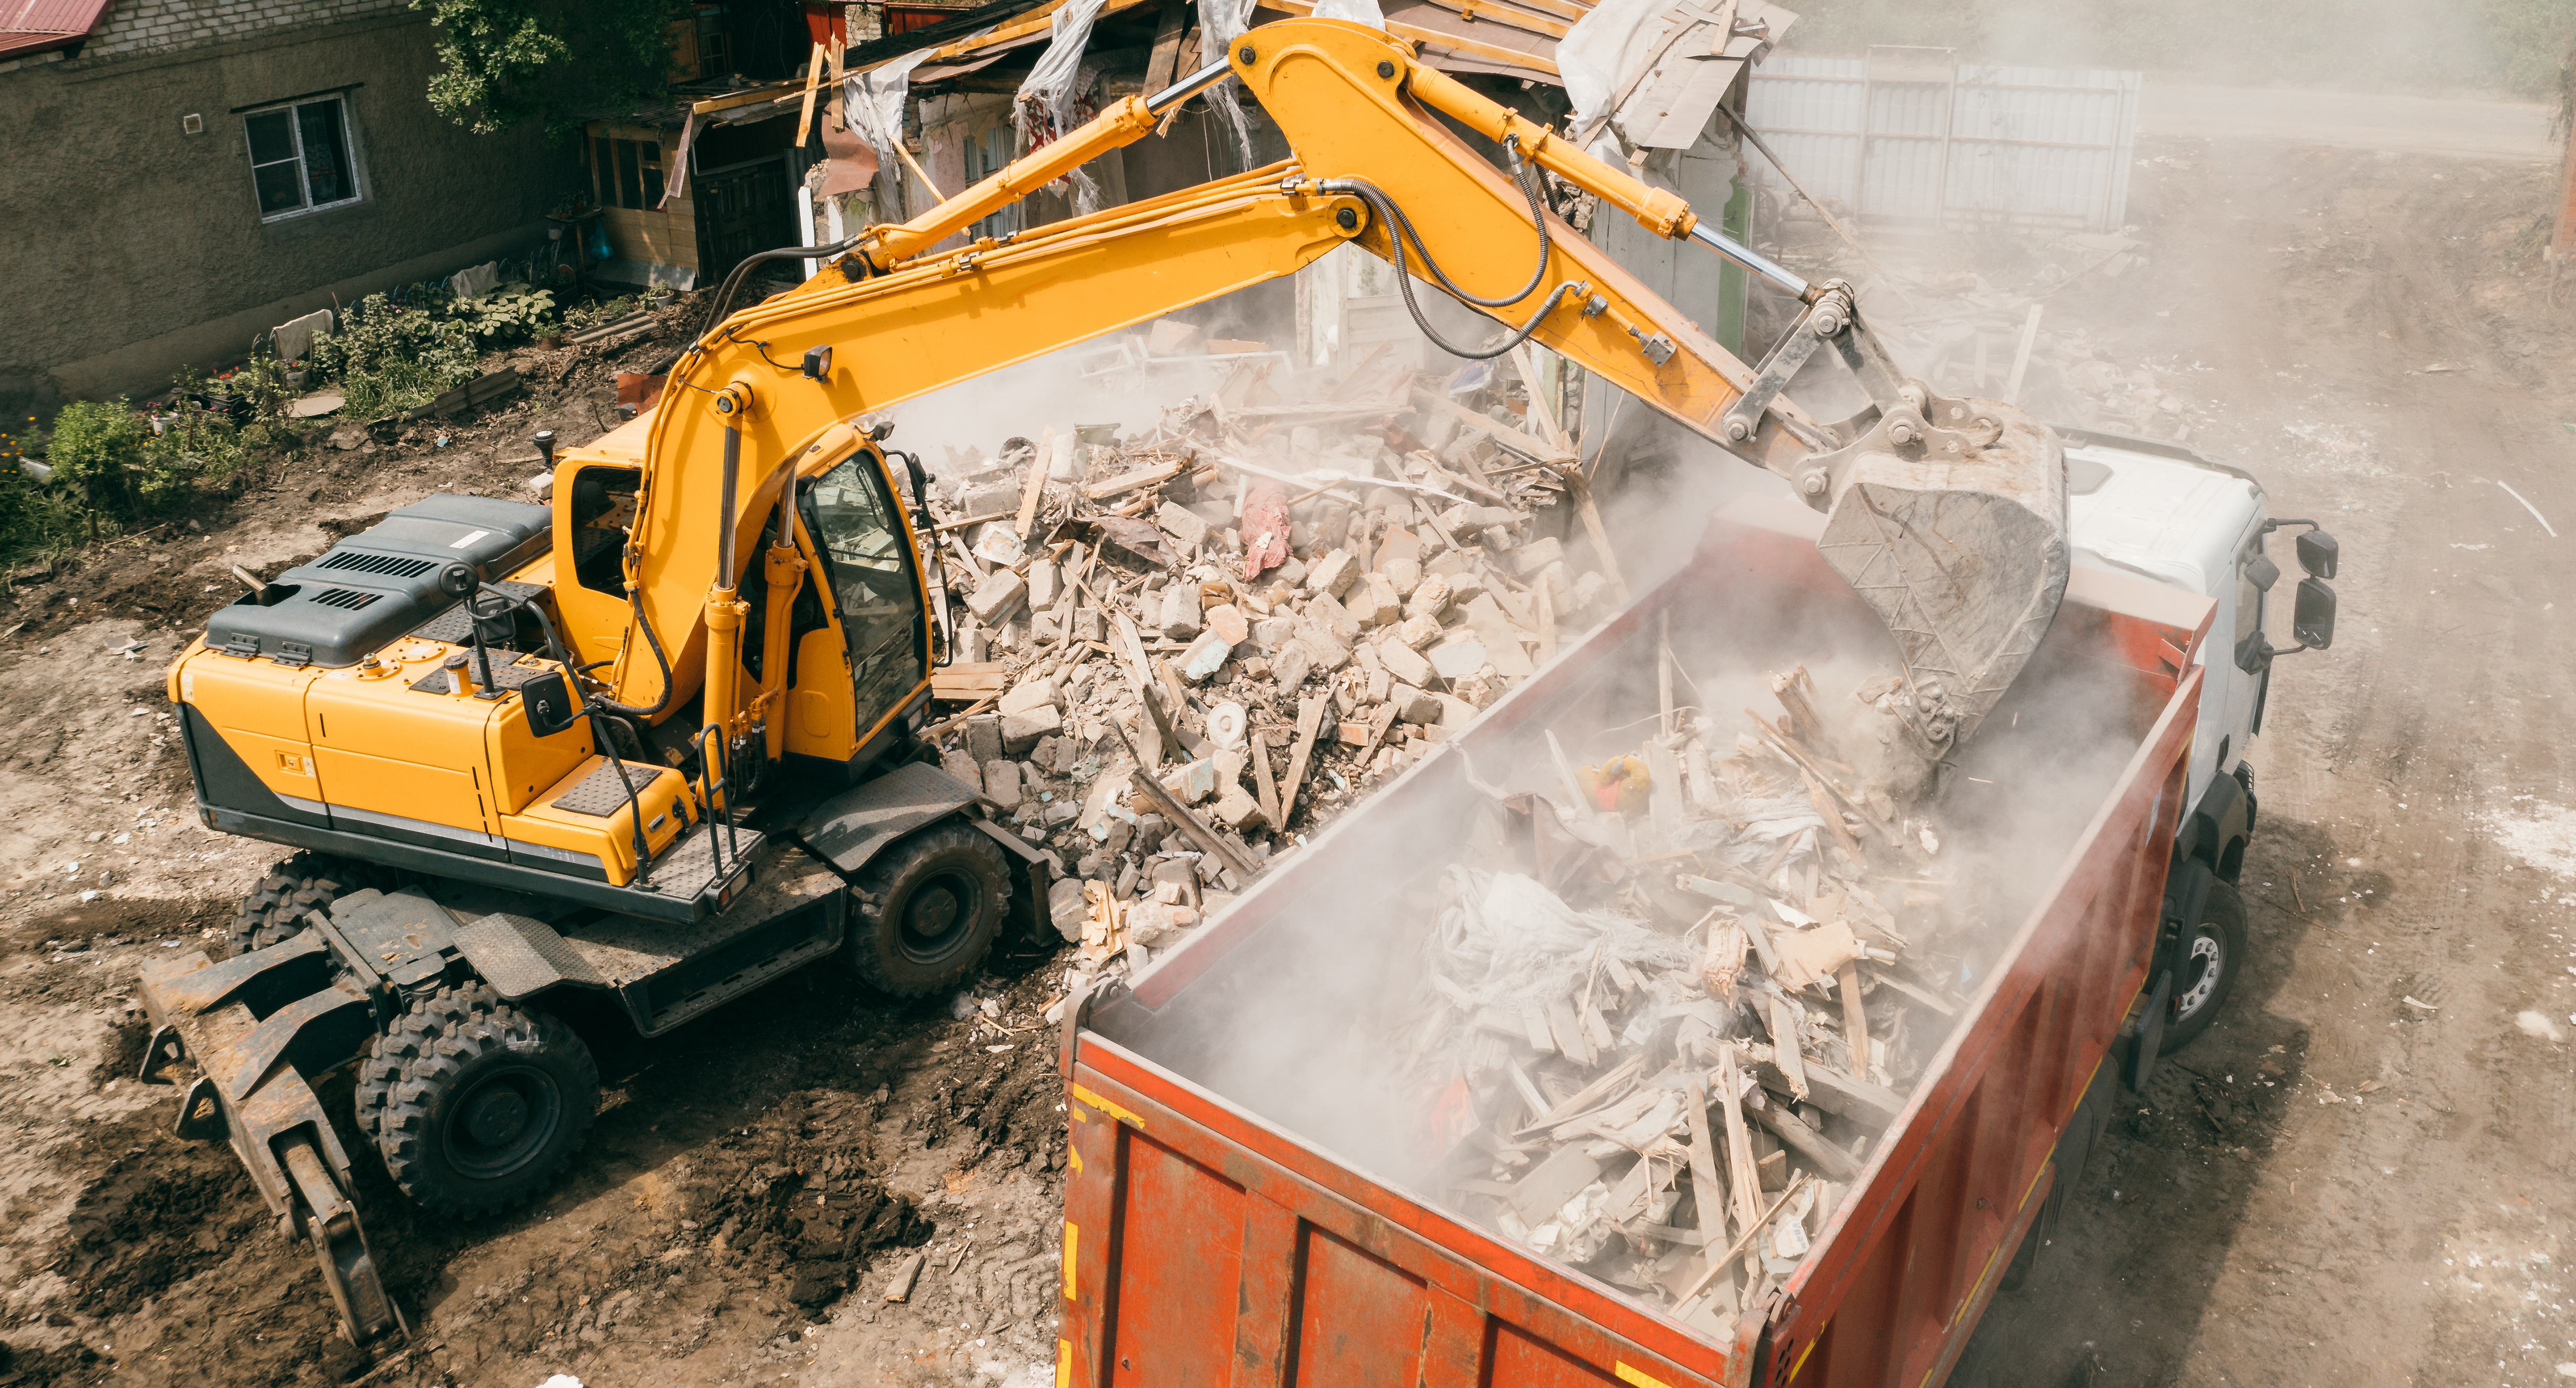 Managing construction debris matters